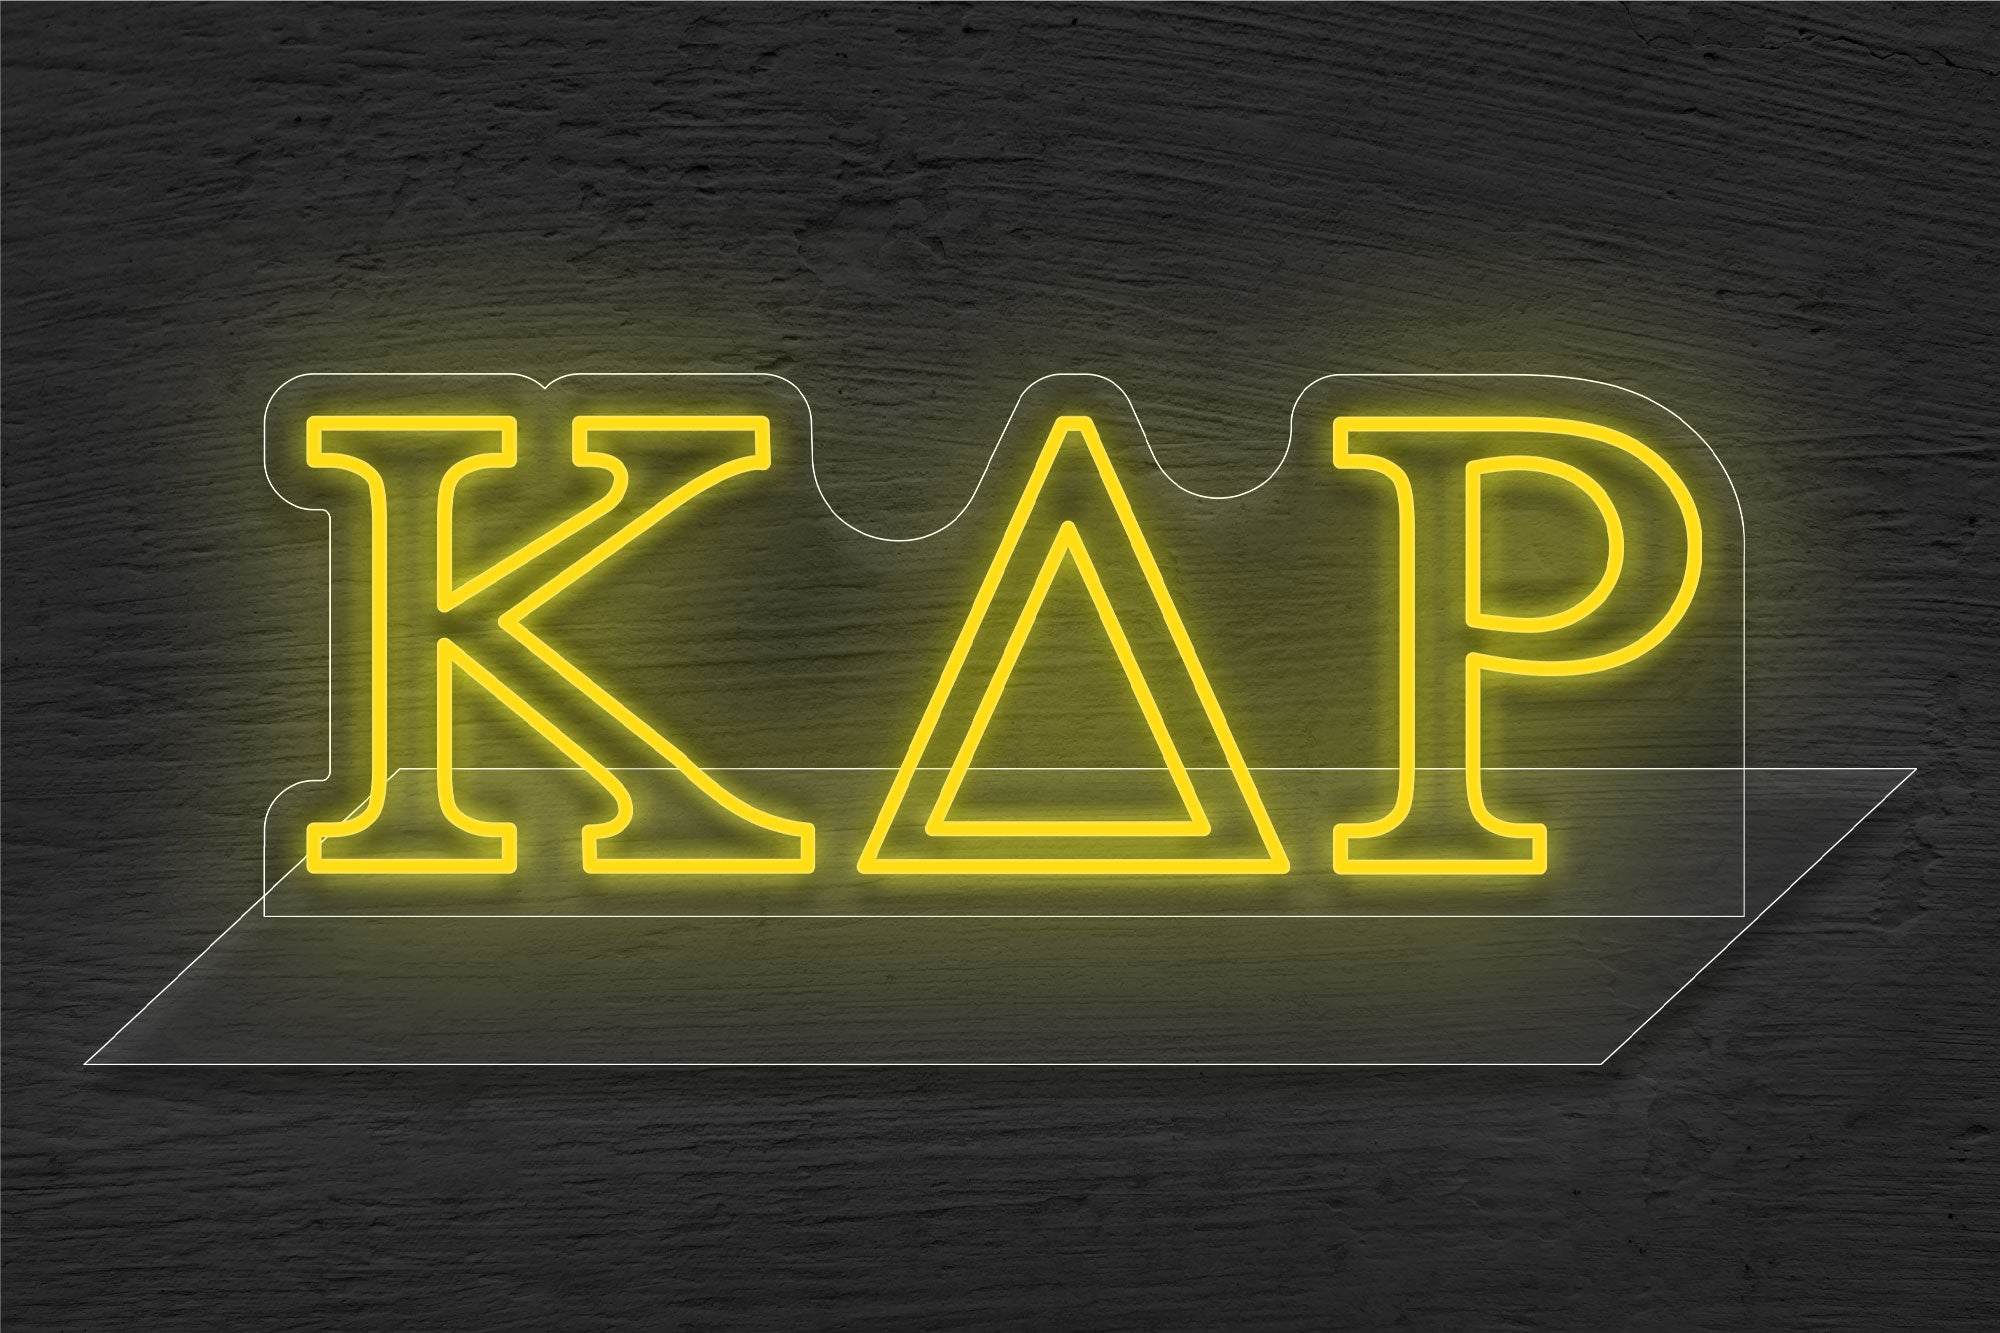 Kappa Delta Rho LED Neon Sign